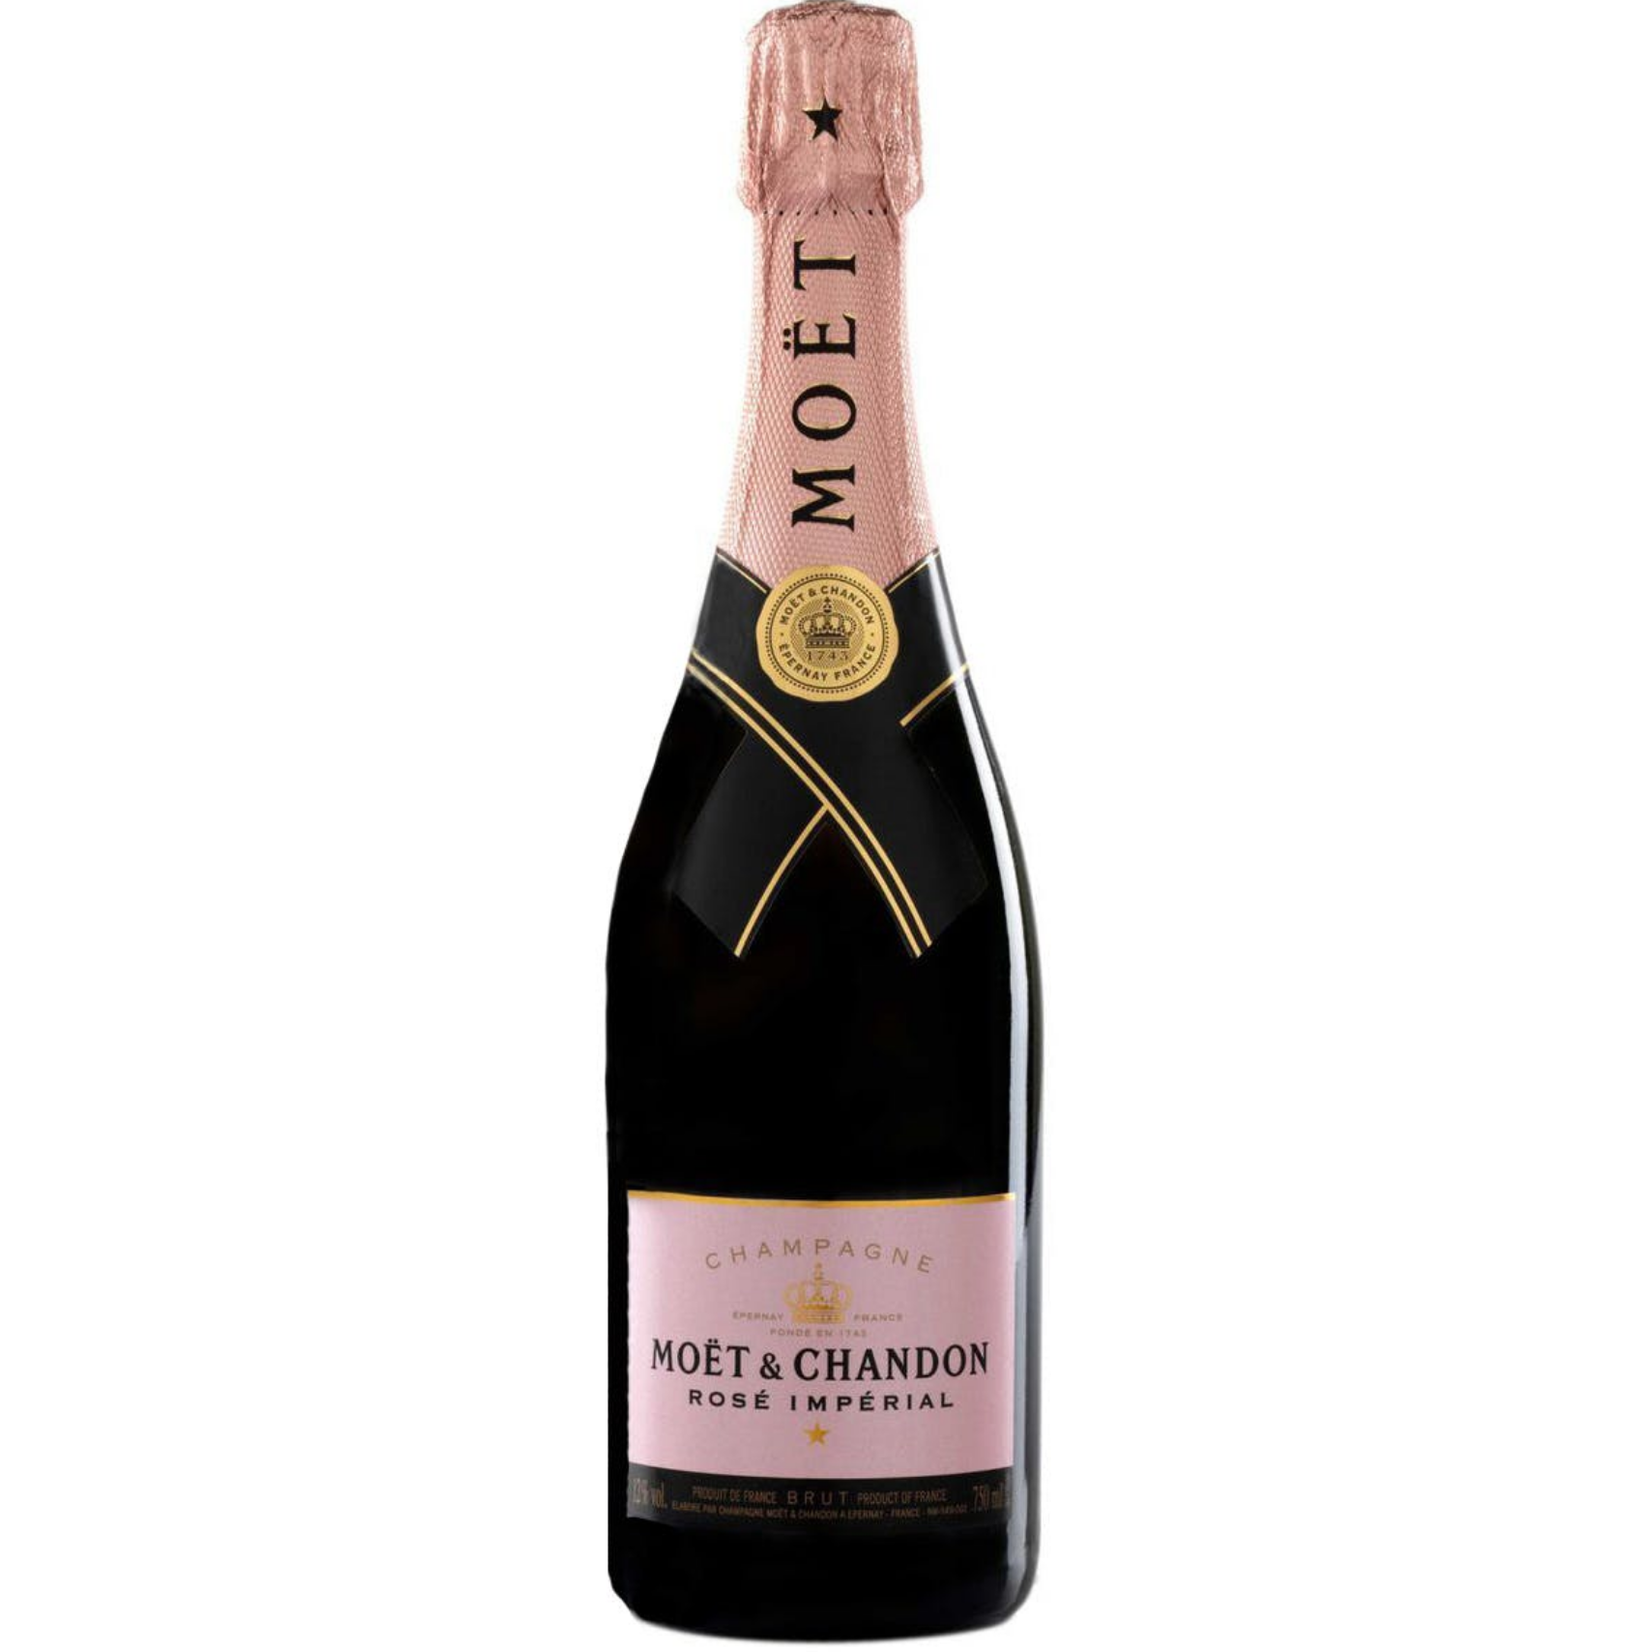 NV, Moet & Chandon ROSE Imperial, Champagne, Epernay, Champagne, France, 12% Alc, CTNR